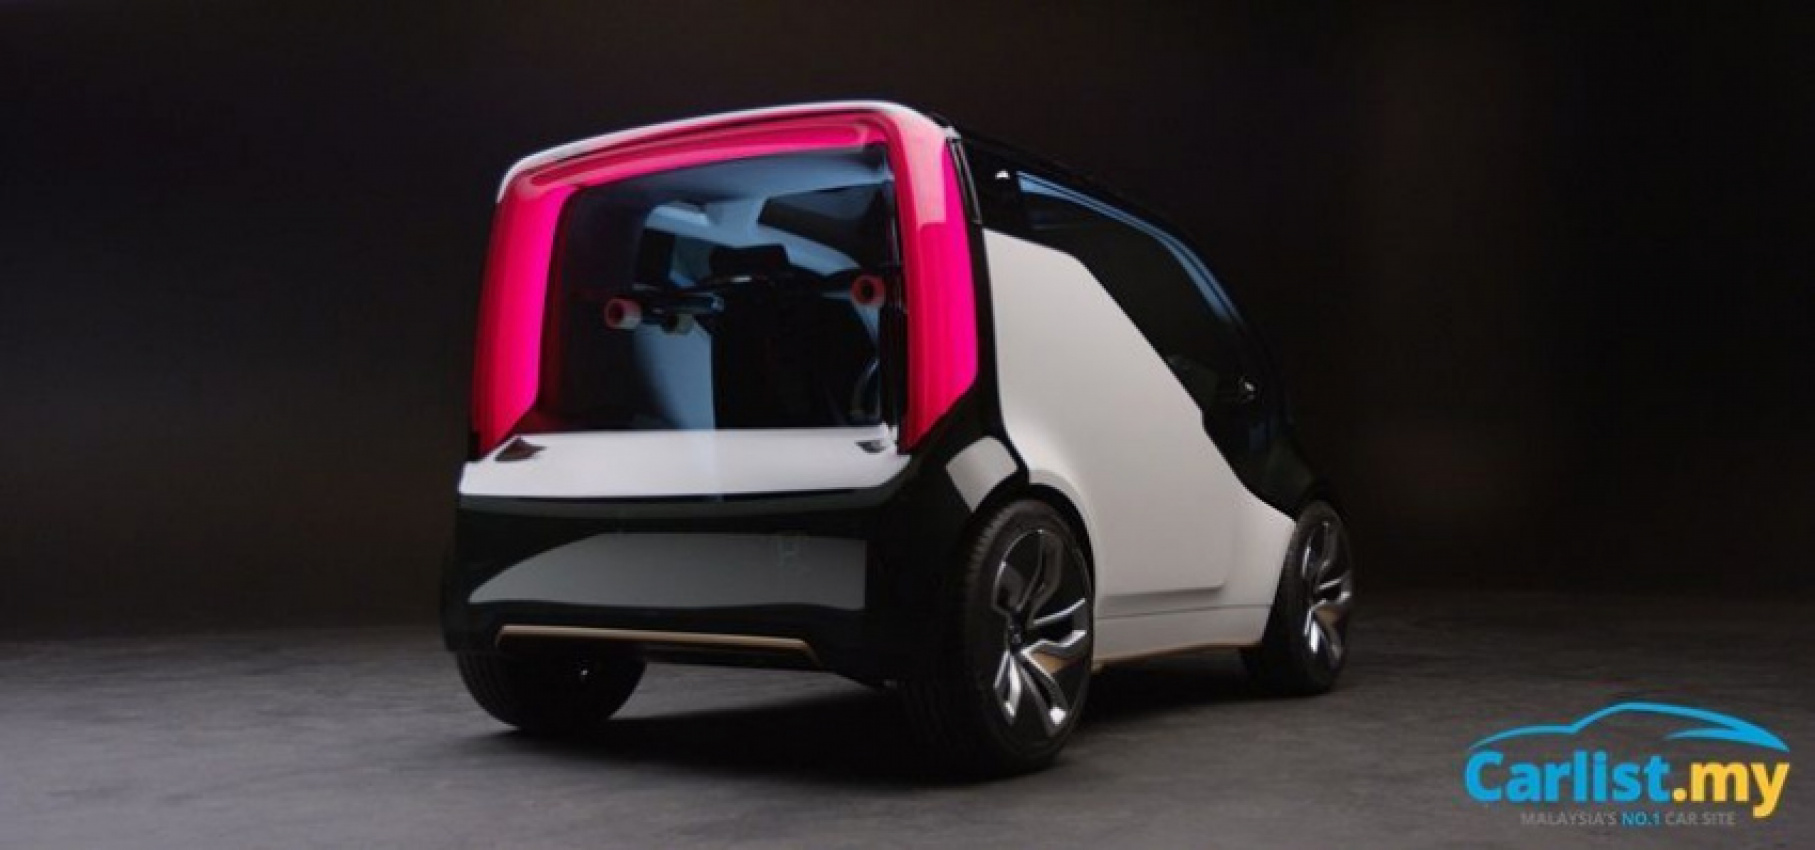 autos, cars, honda, auto news, geneva, geneva 2017, honda neuv, neuv, geneva 2017: honda neuv electric concept car makes european debut